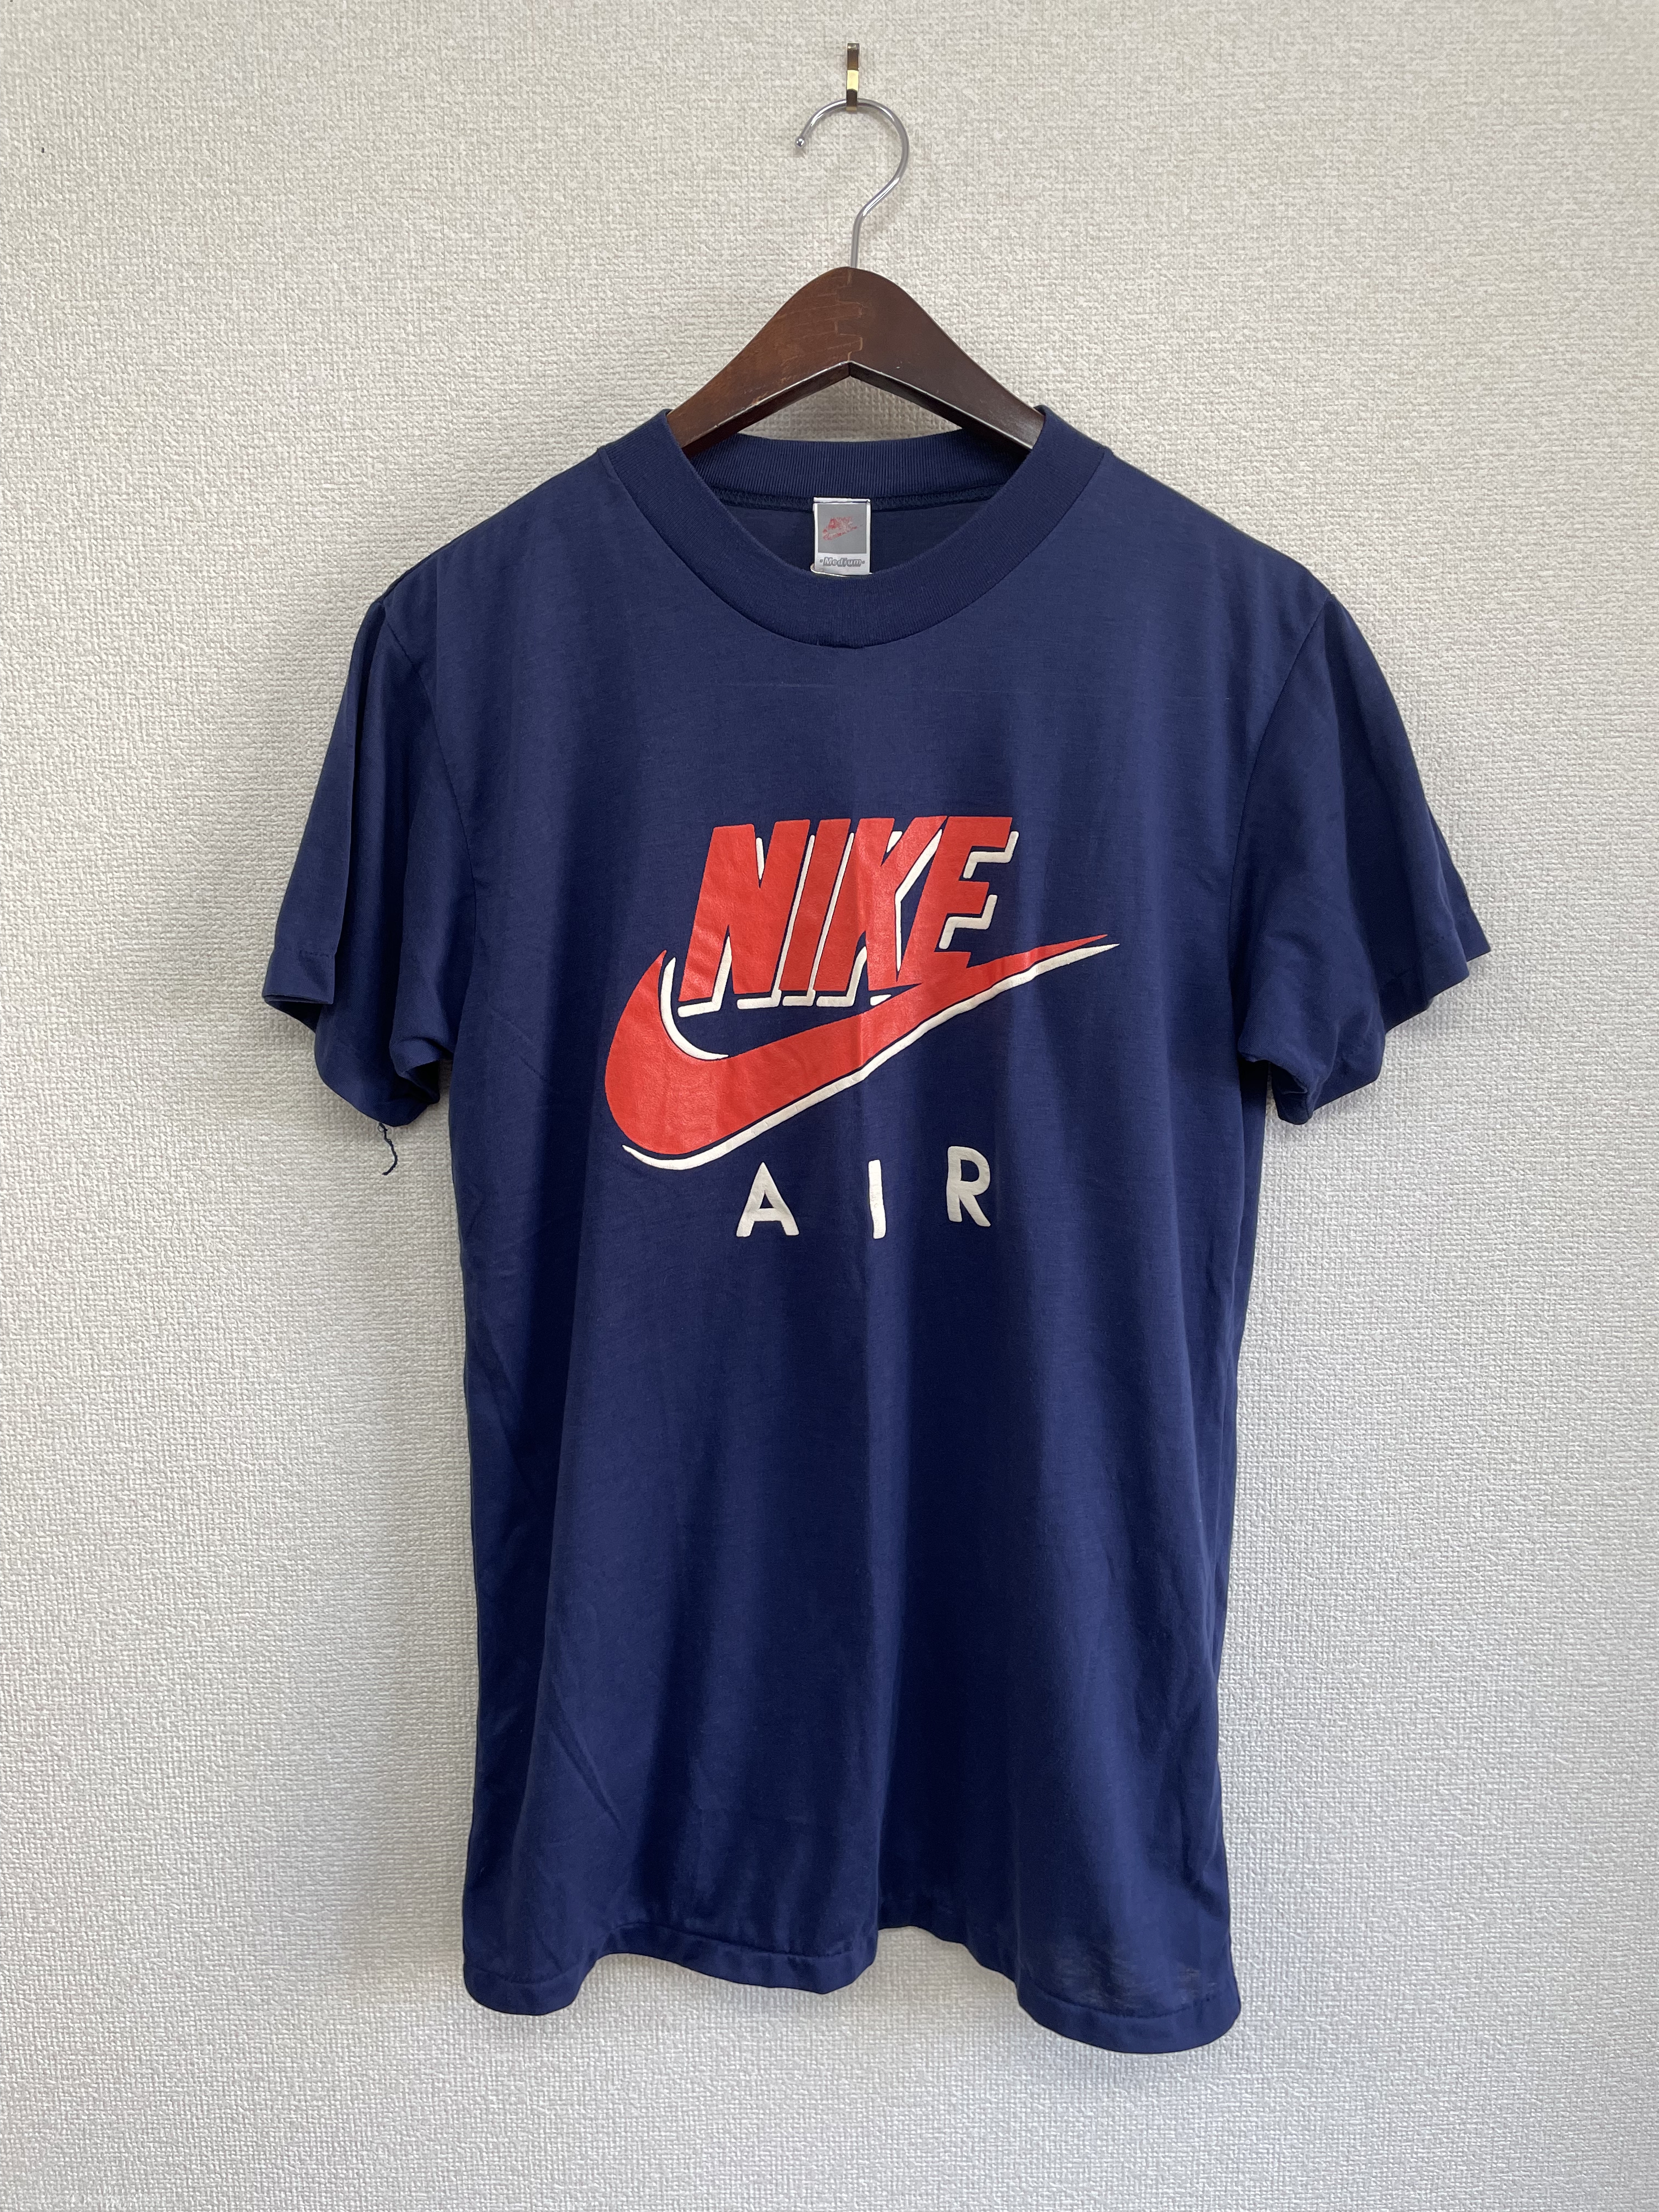 80's 韓国製 ナイキジャパン ビンテージ ナイキ エア Tシャツ NIKE AIR